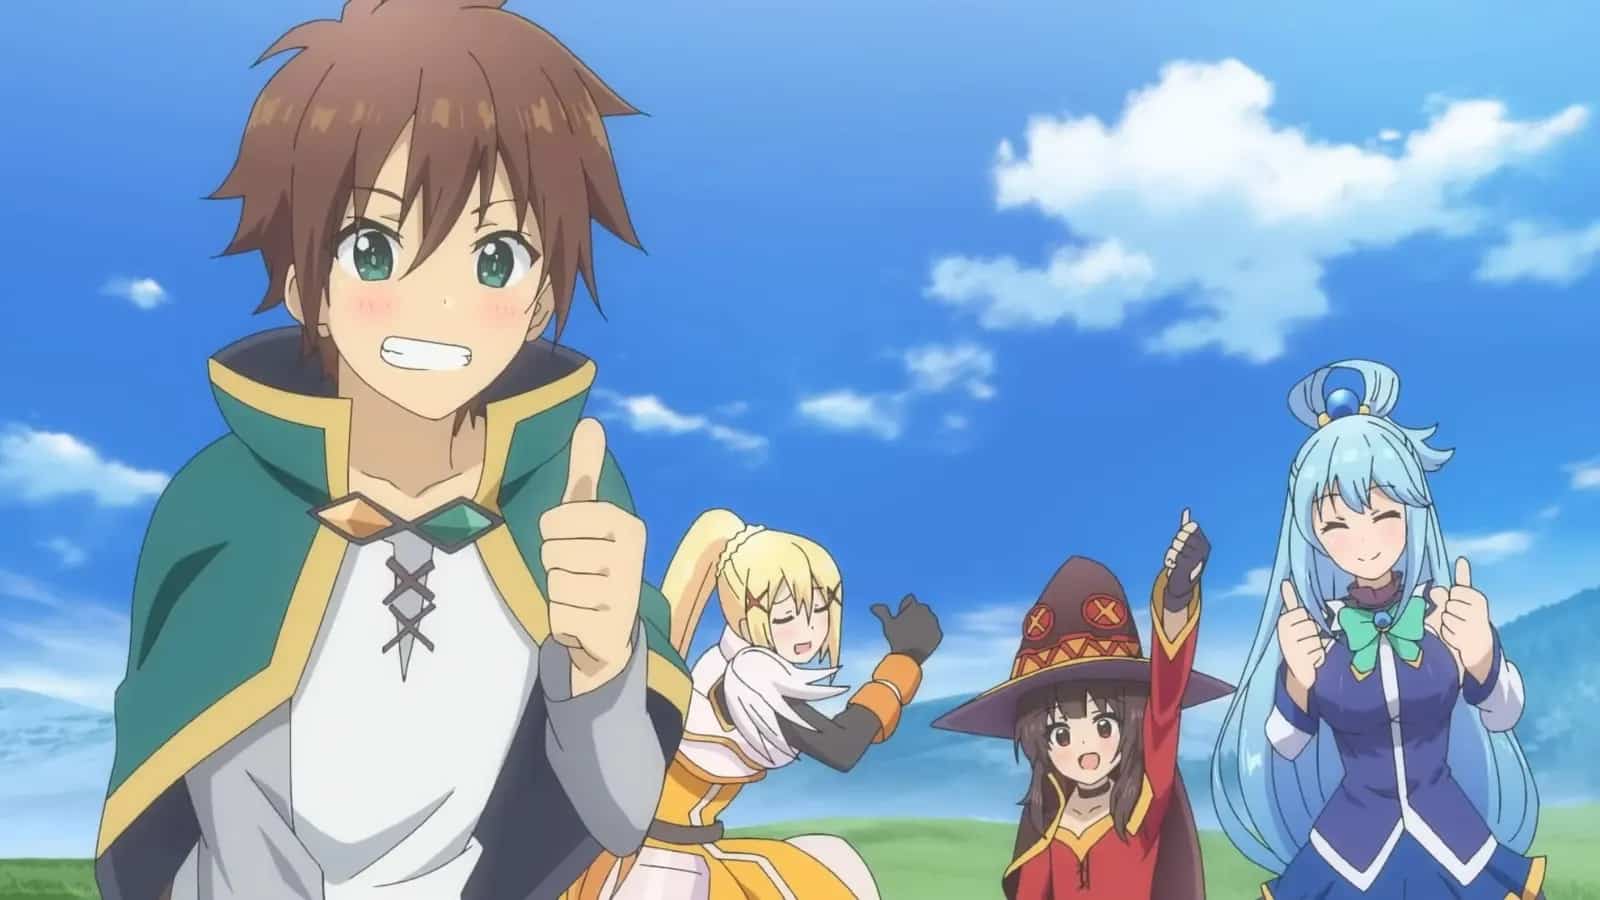 Anime: Konosuba #animes #anime #edit #animeedit #otaku #konosuba #kazu